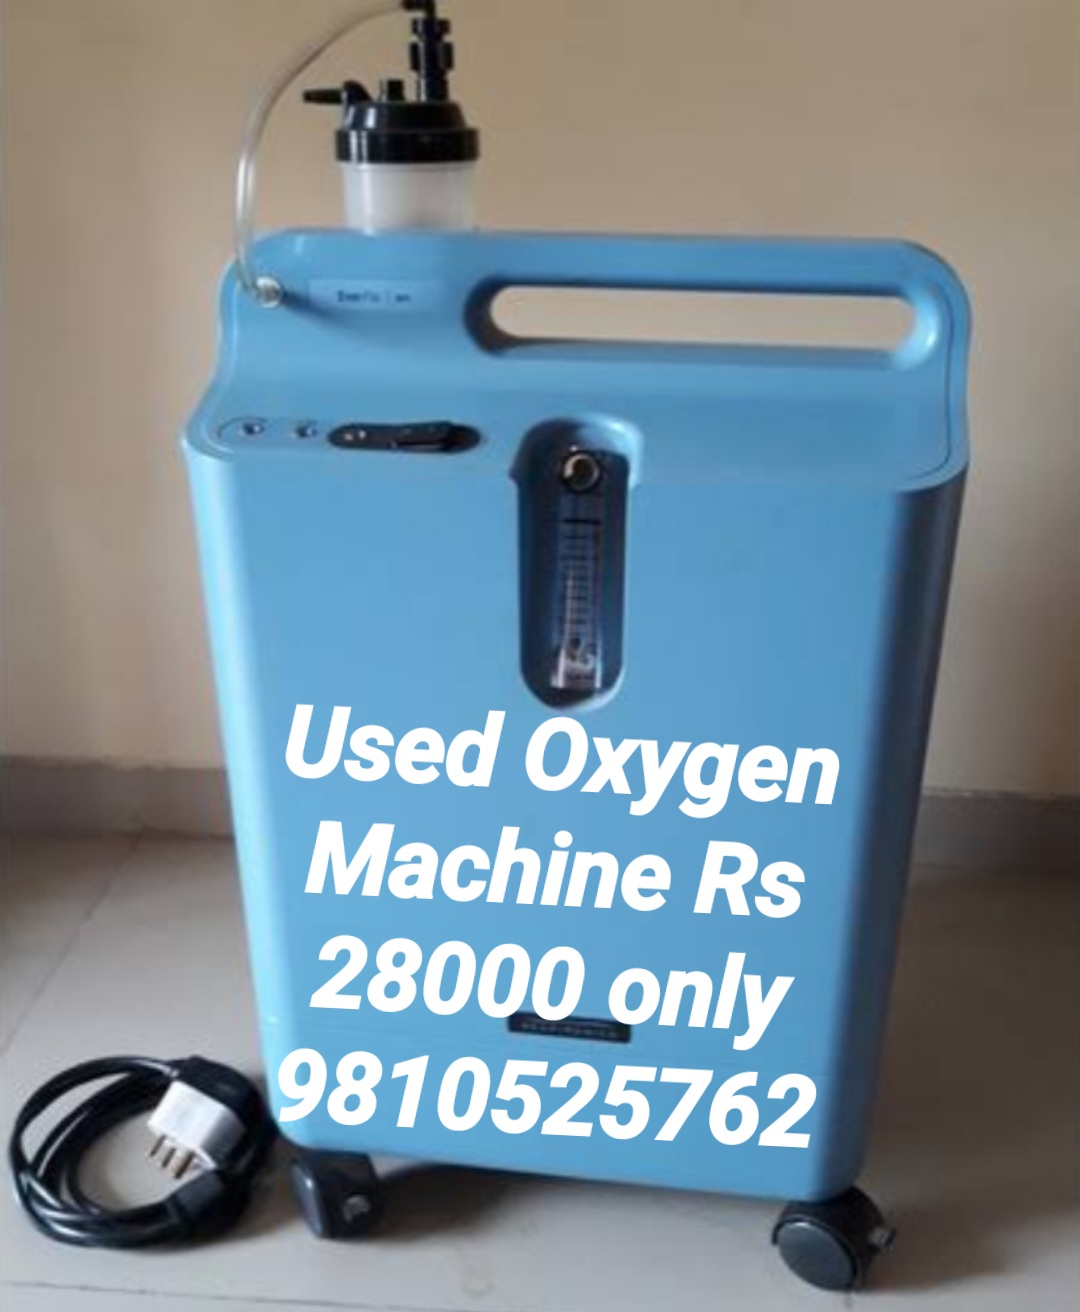 on call oxygen machine on rent 9810525762